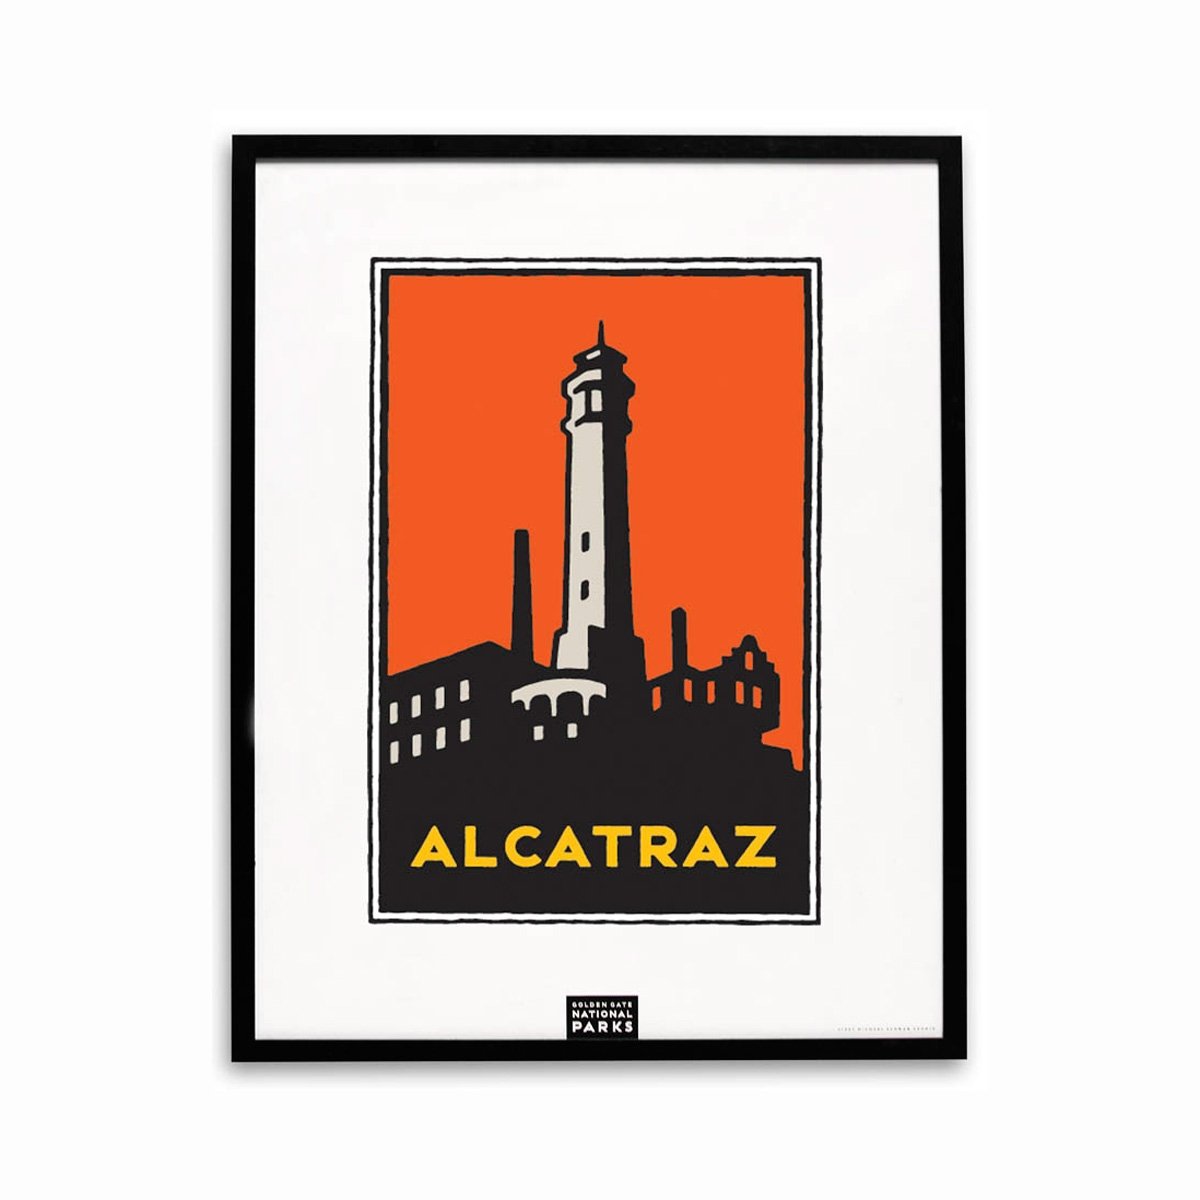 Framed 22 x 28 inch Alcatraz Island silk-screened poster, art by Michael Schwab.